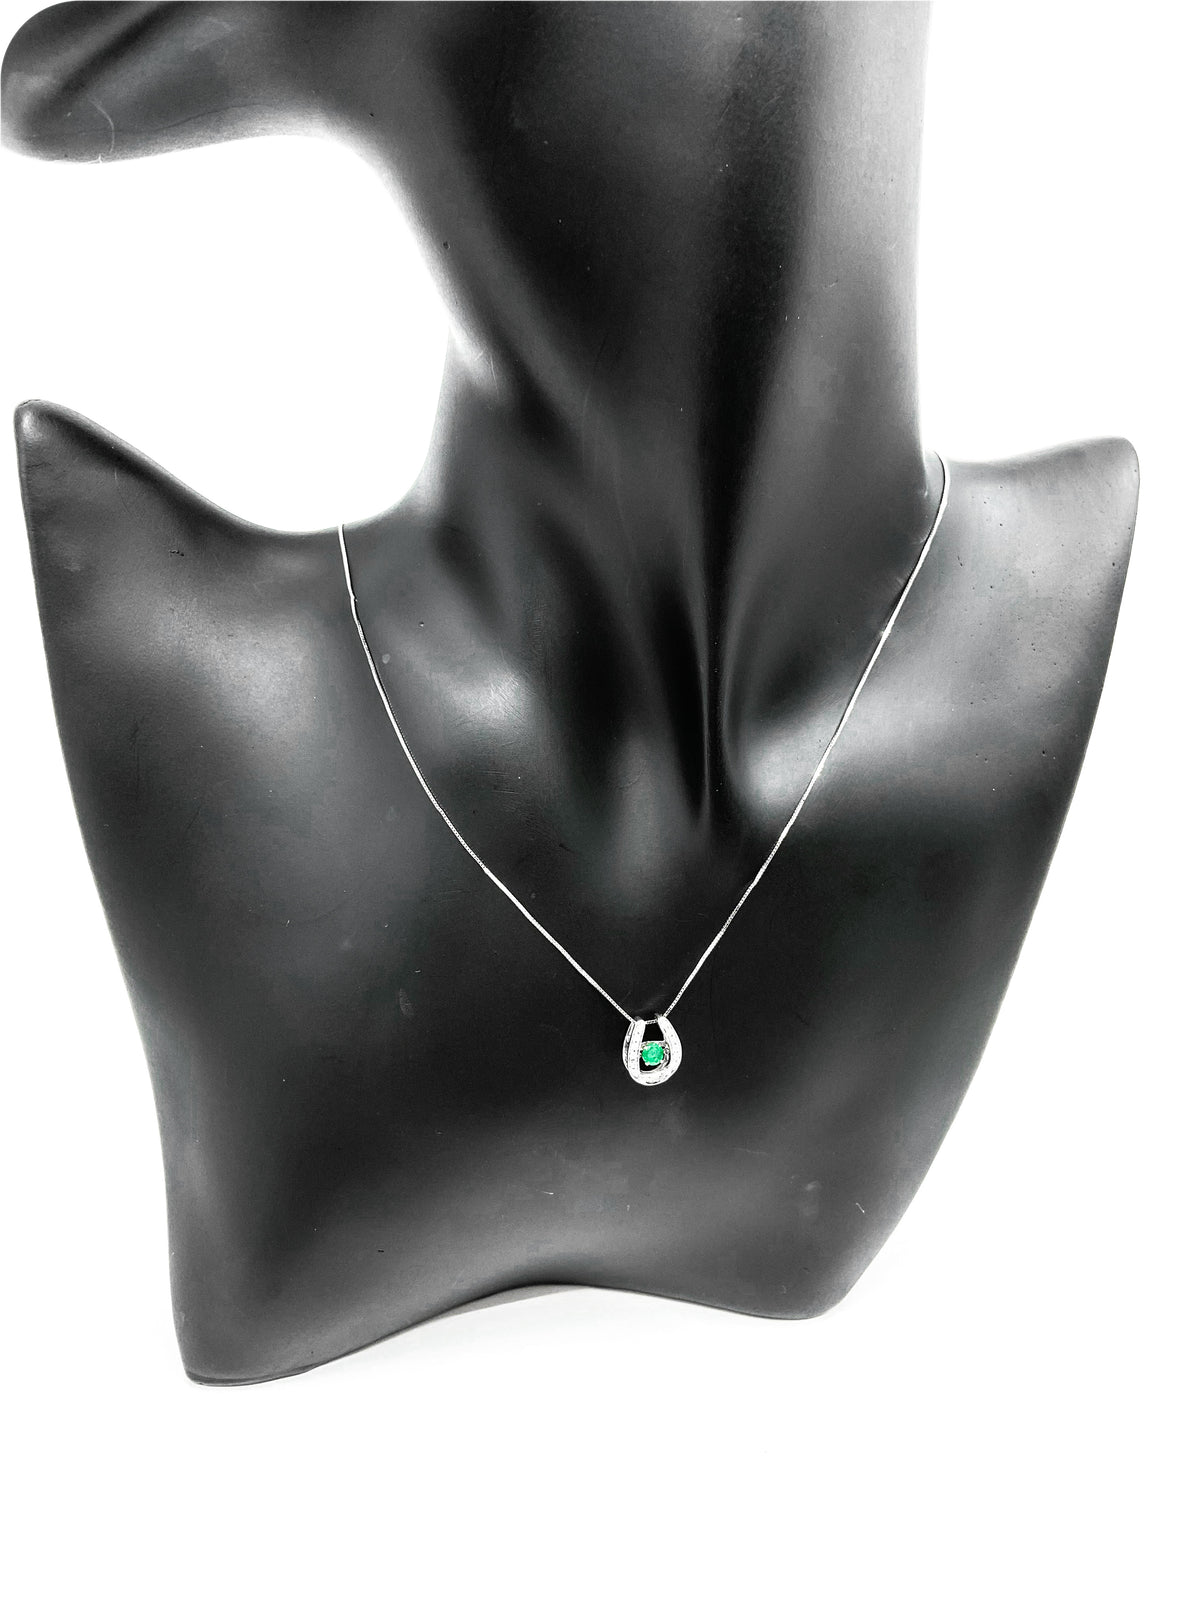 10K White Gold 0.15cttw Round Cut Genuine Emerald and0.07cttw Round Cut  Diamonds Necklace, 18”